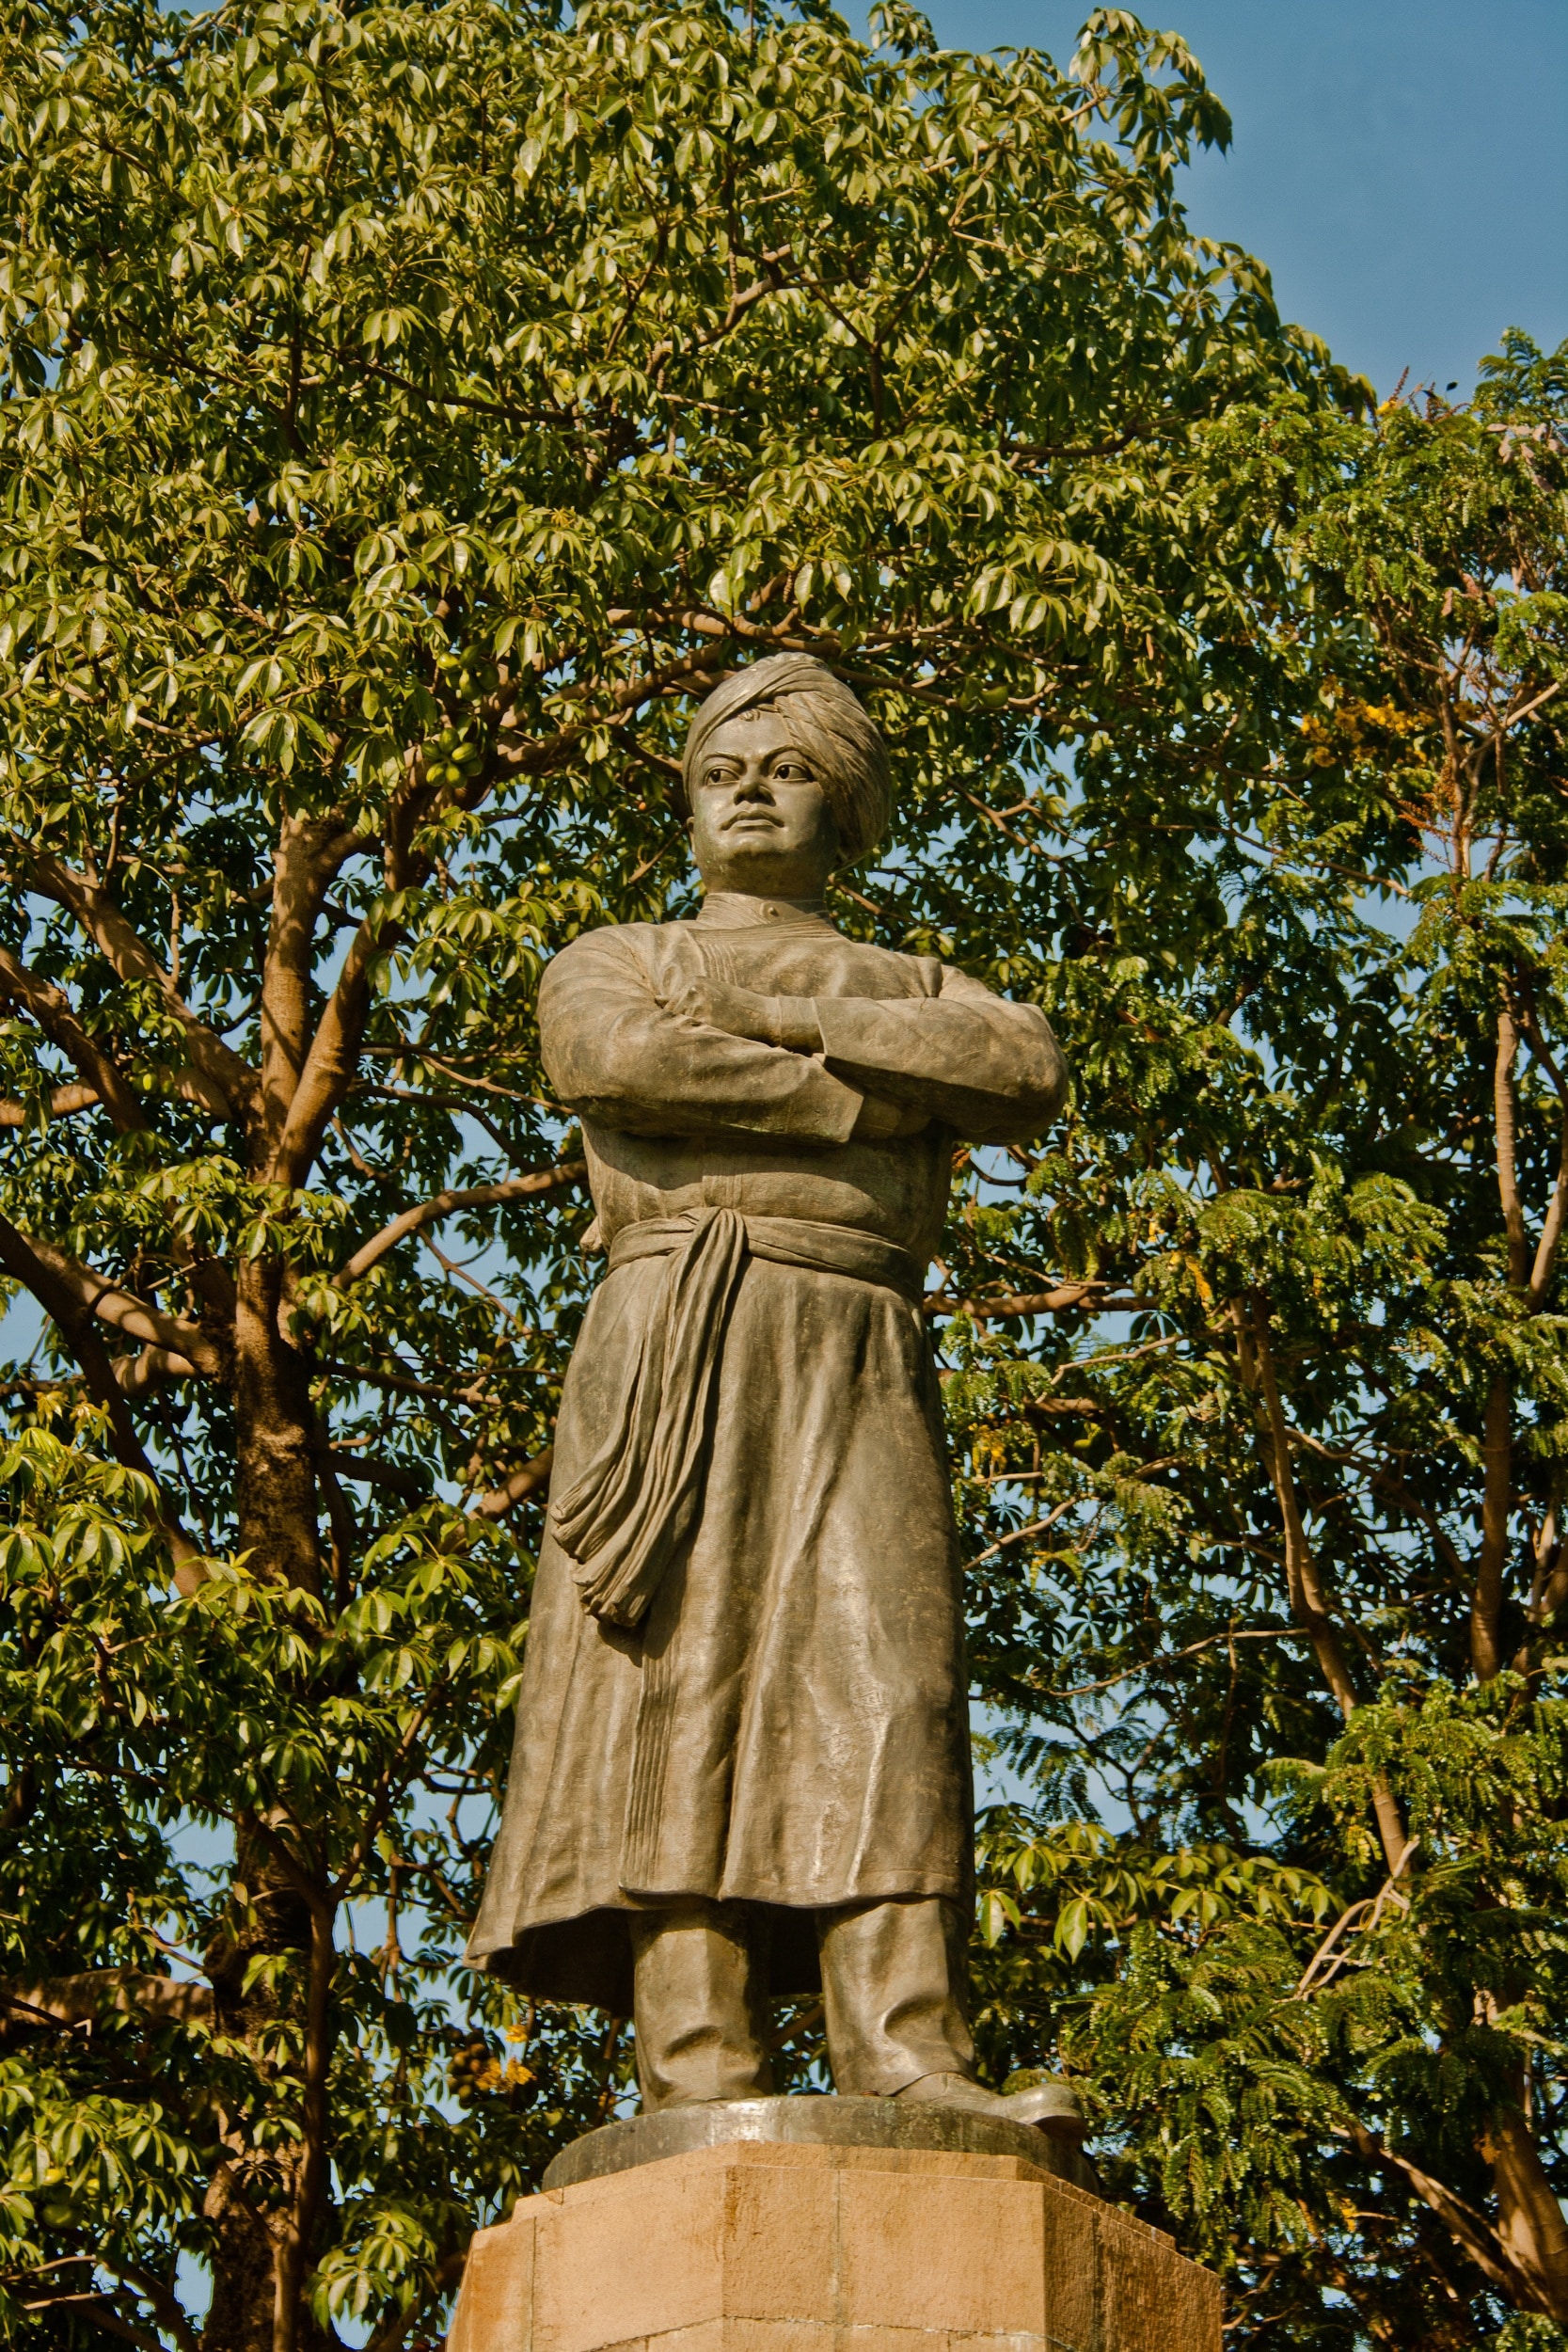 photograph of a man statue